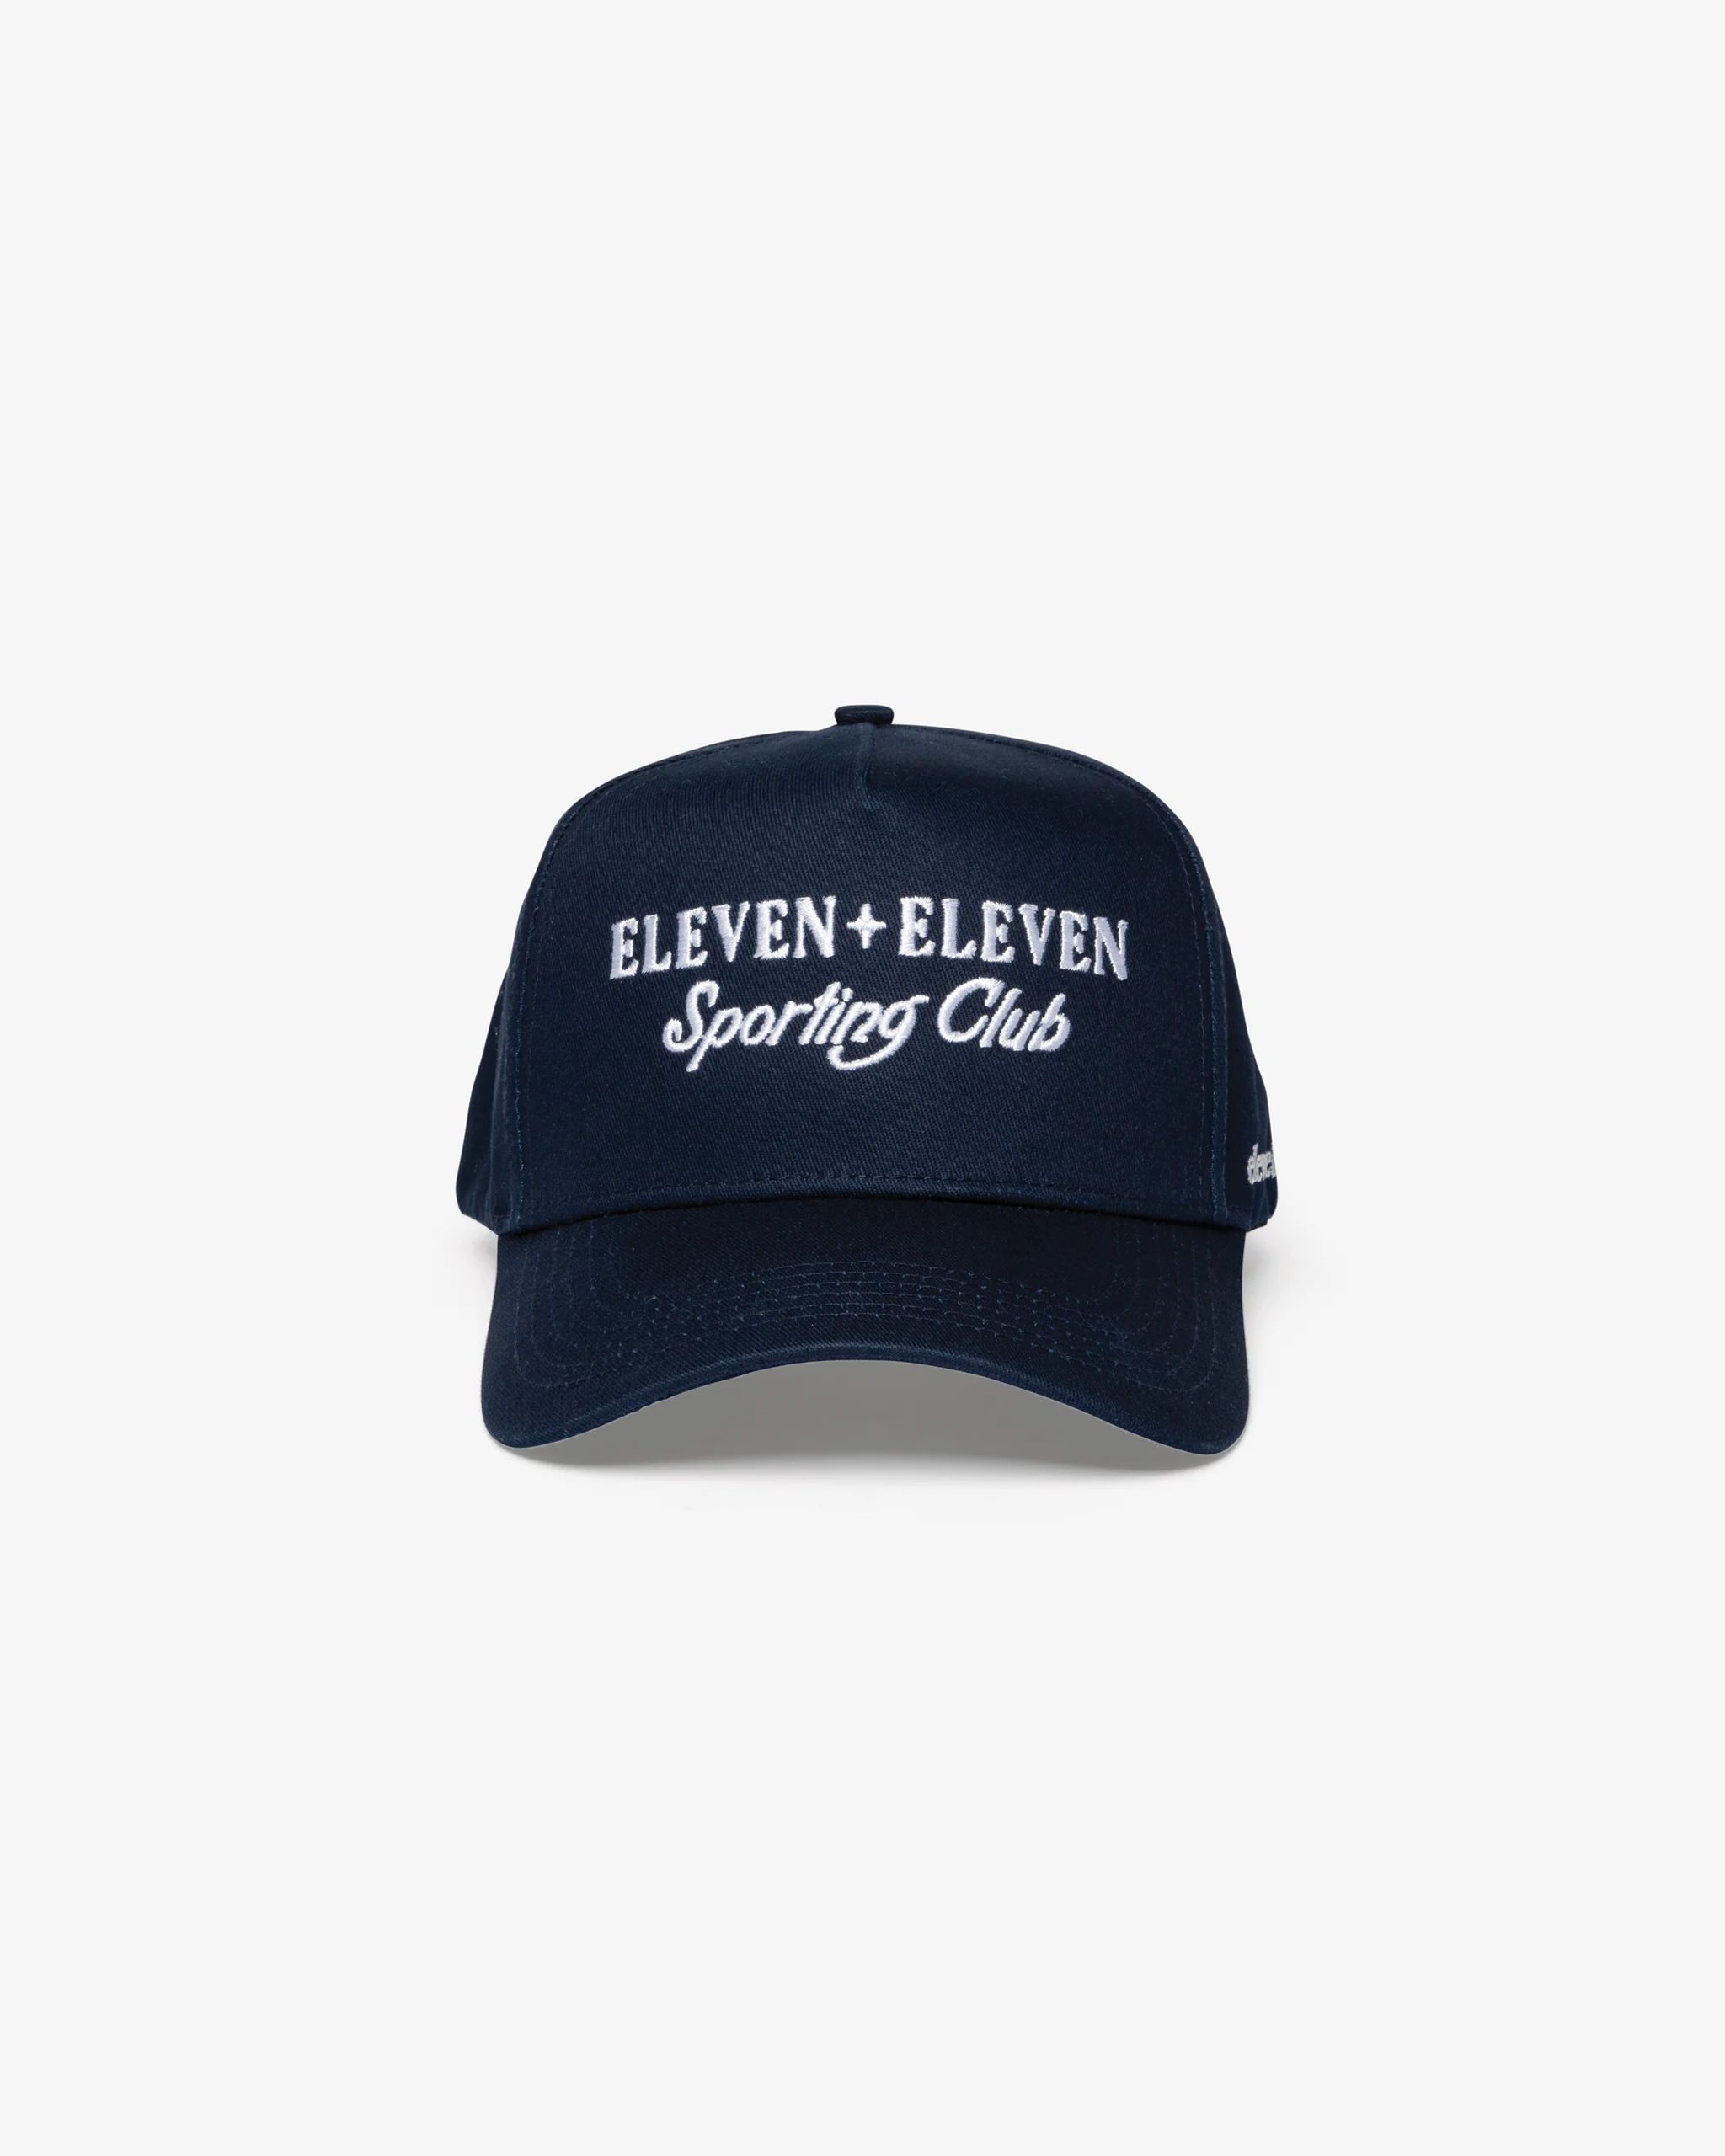 Sporting Club Cap (Navy) | Eleven Eleven